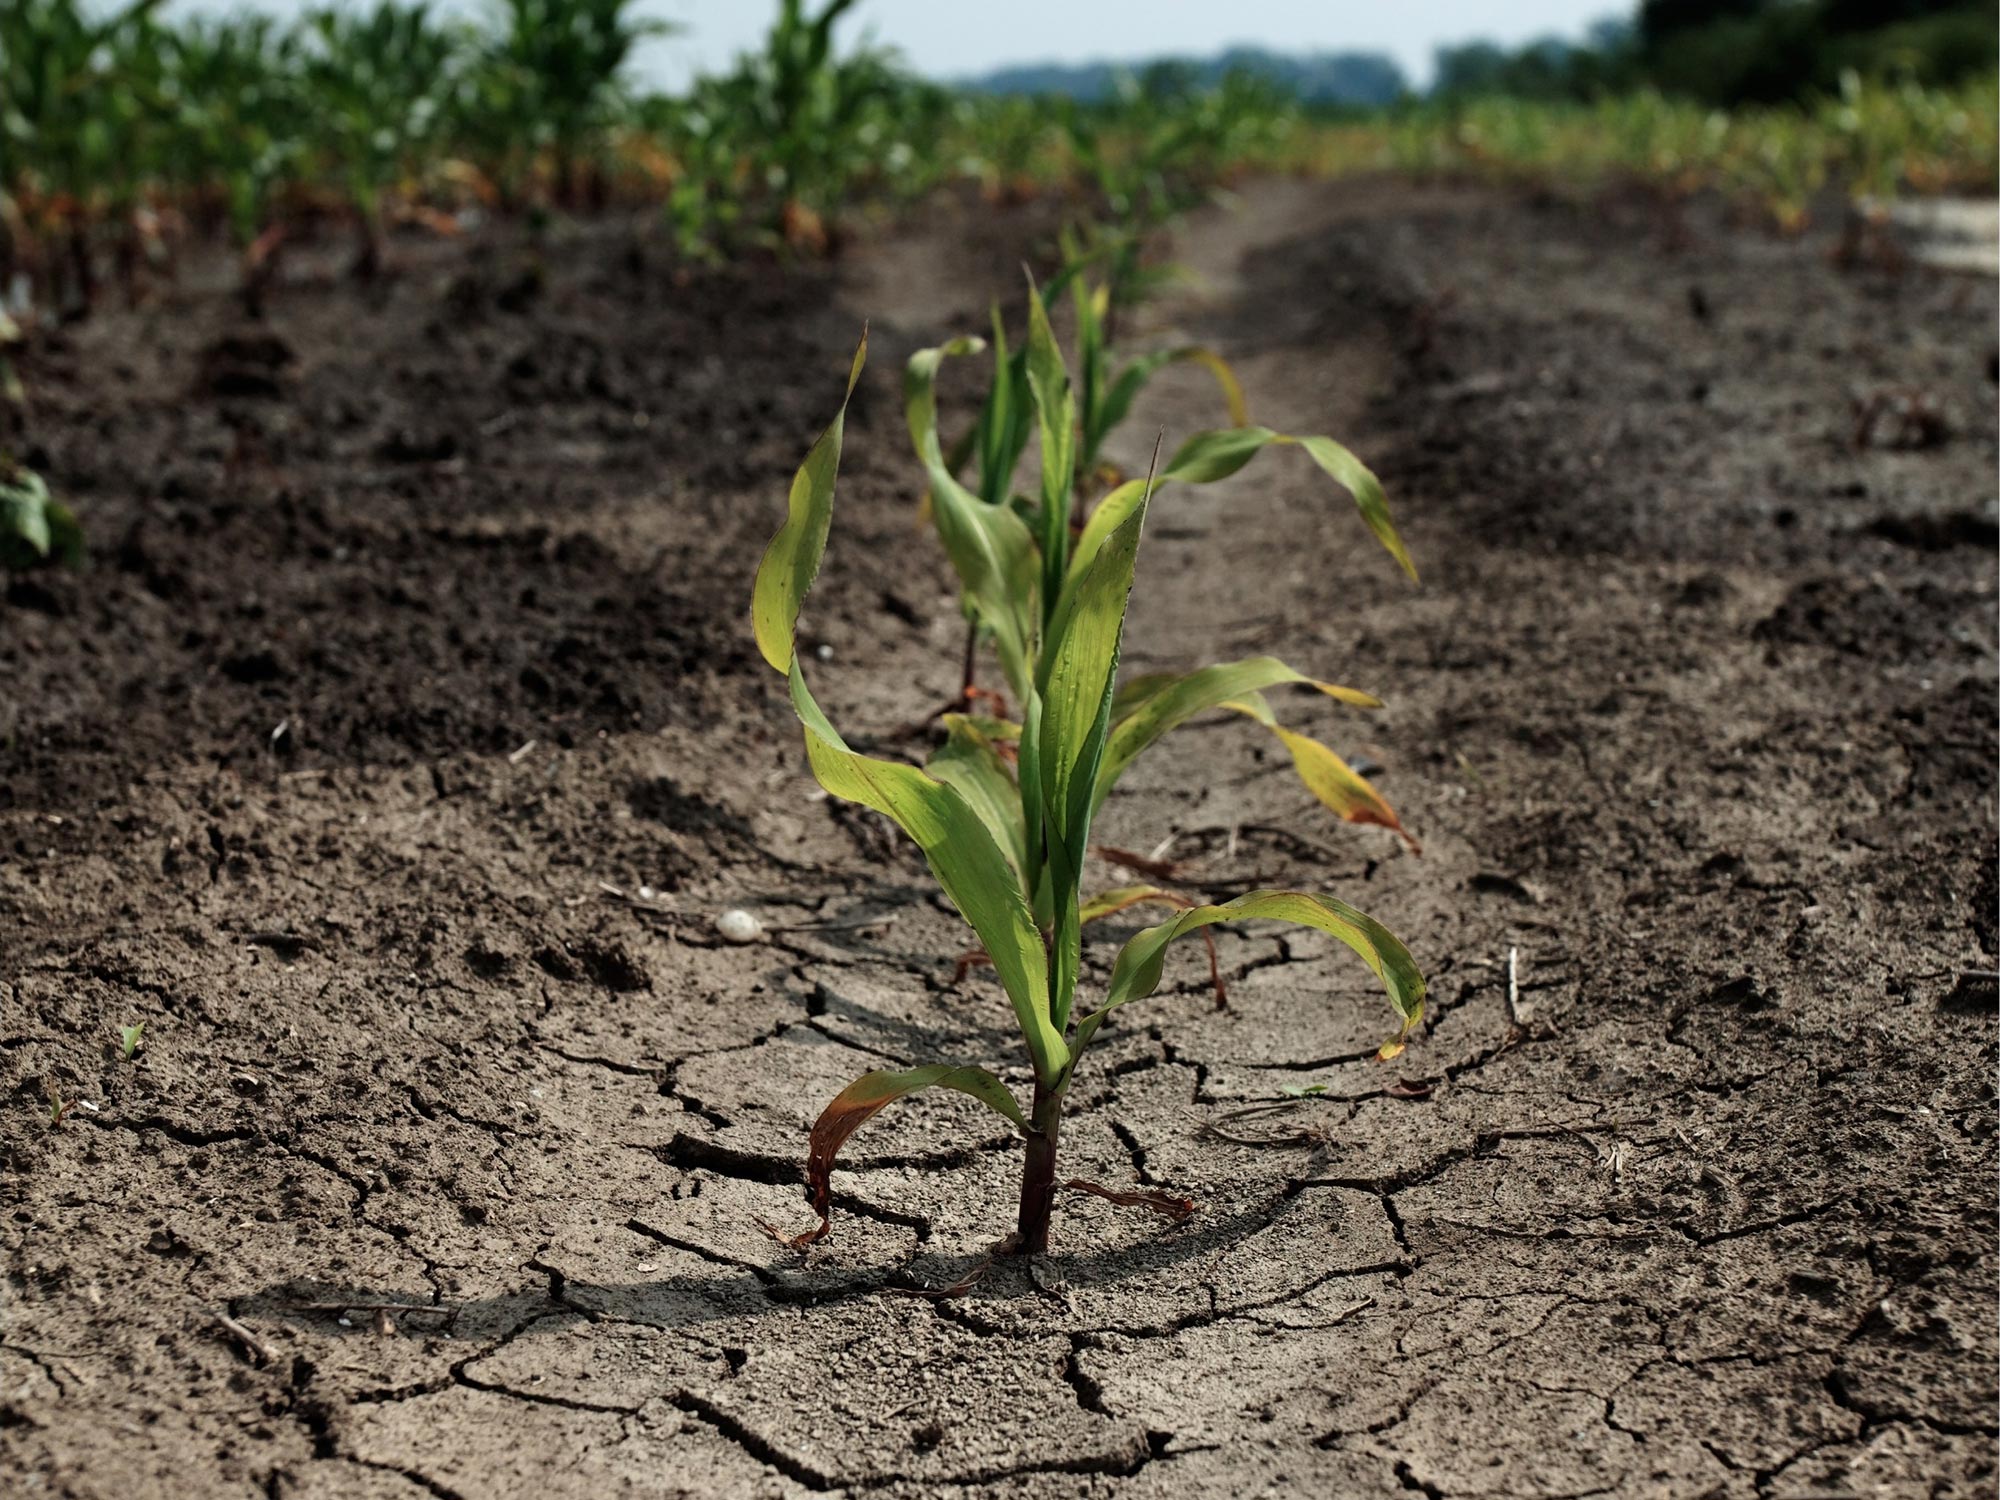 Agriculture Drought Climate Change Concept